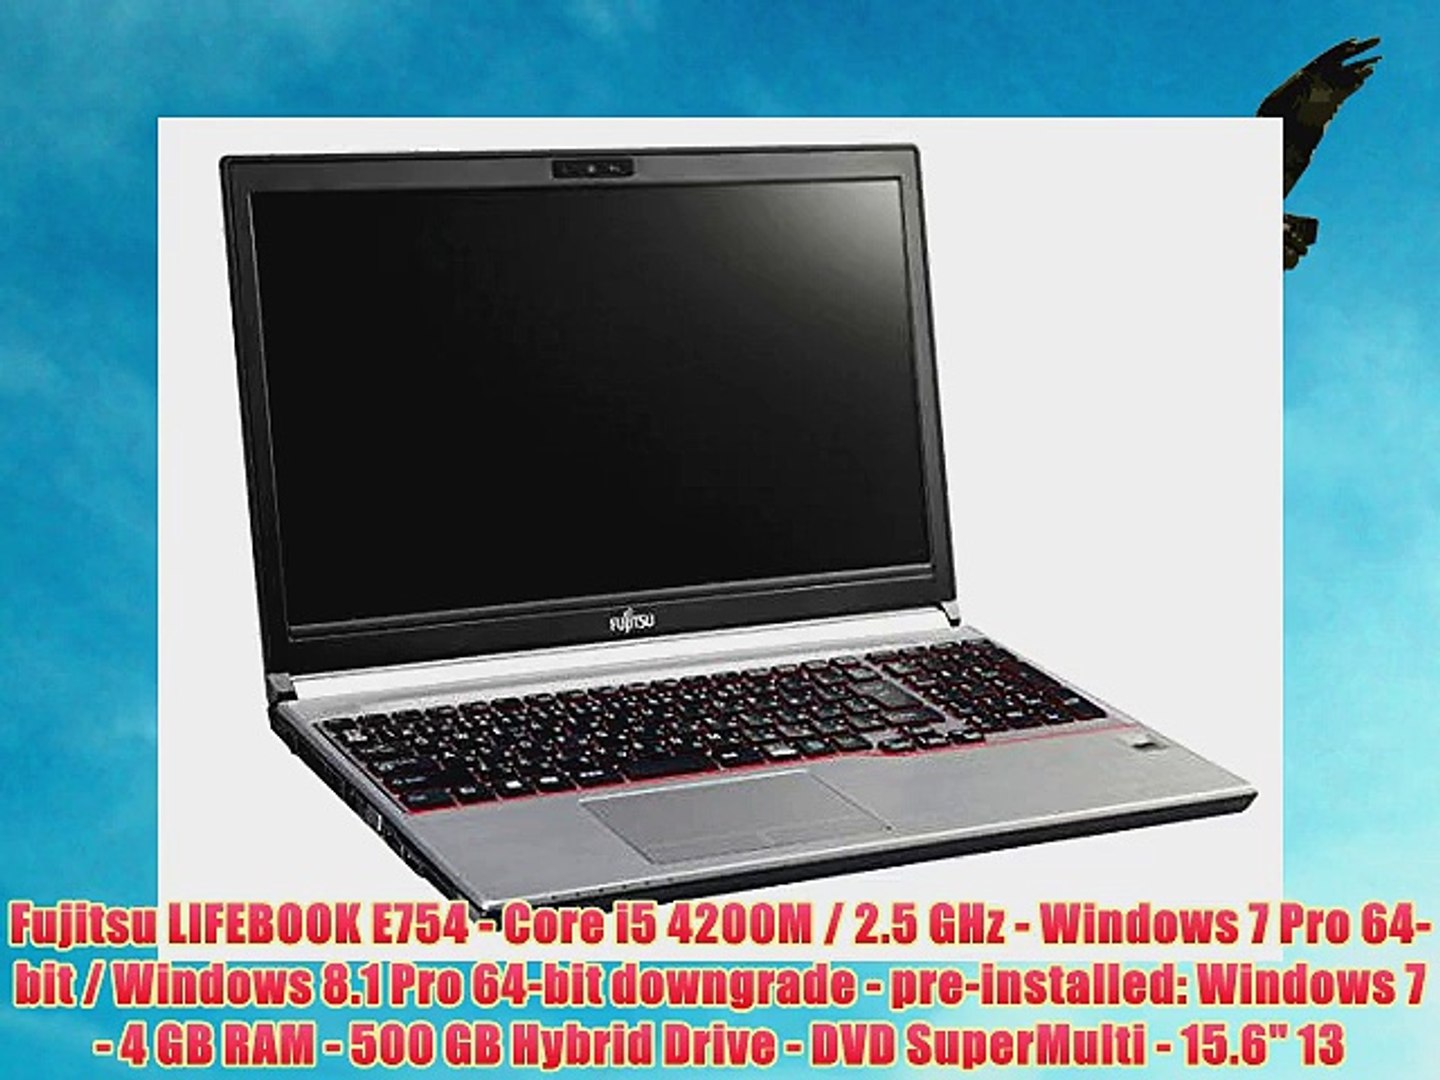 Fujitsu LIFEBOOK E754 - Core i5 4200M / 2.5 GHz - Windows 7 Pro 64-bit /  Windows 8.1 Pro 64-bit